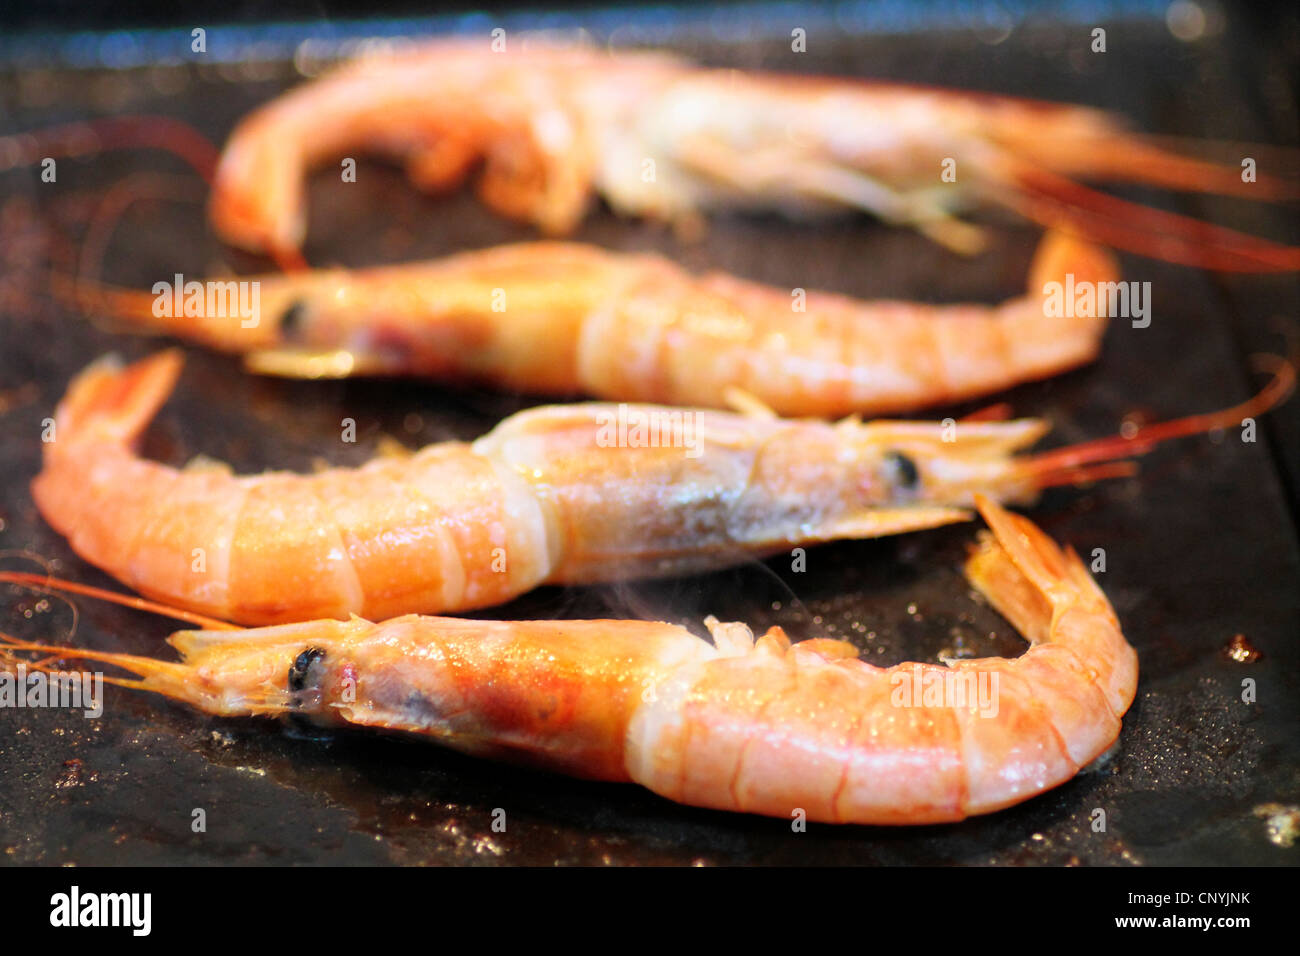 seafood, food, prawn, crustacean, snack, cuisine, orange, fried, prepared, ingredient, plate, gourmet, delicious, grill, barbecu Stock Photo